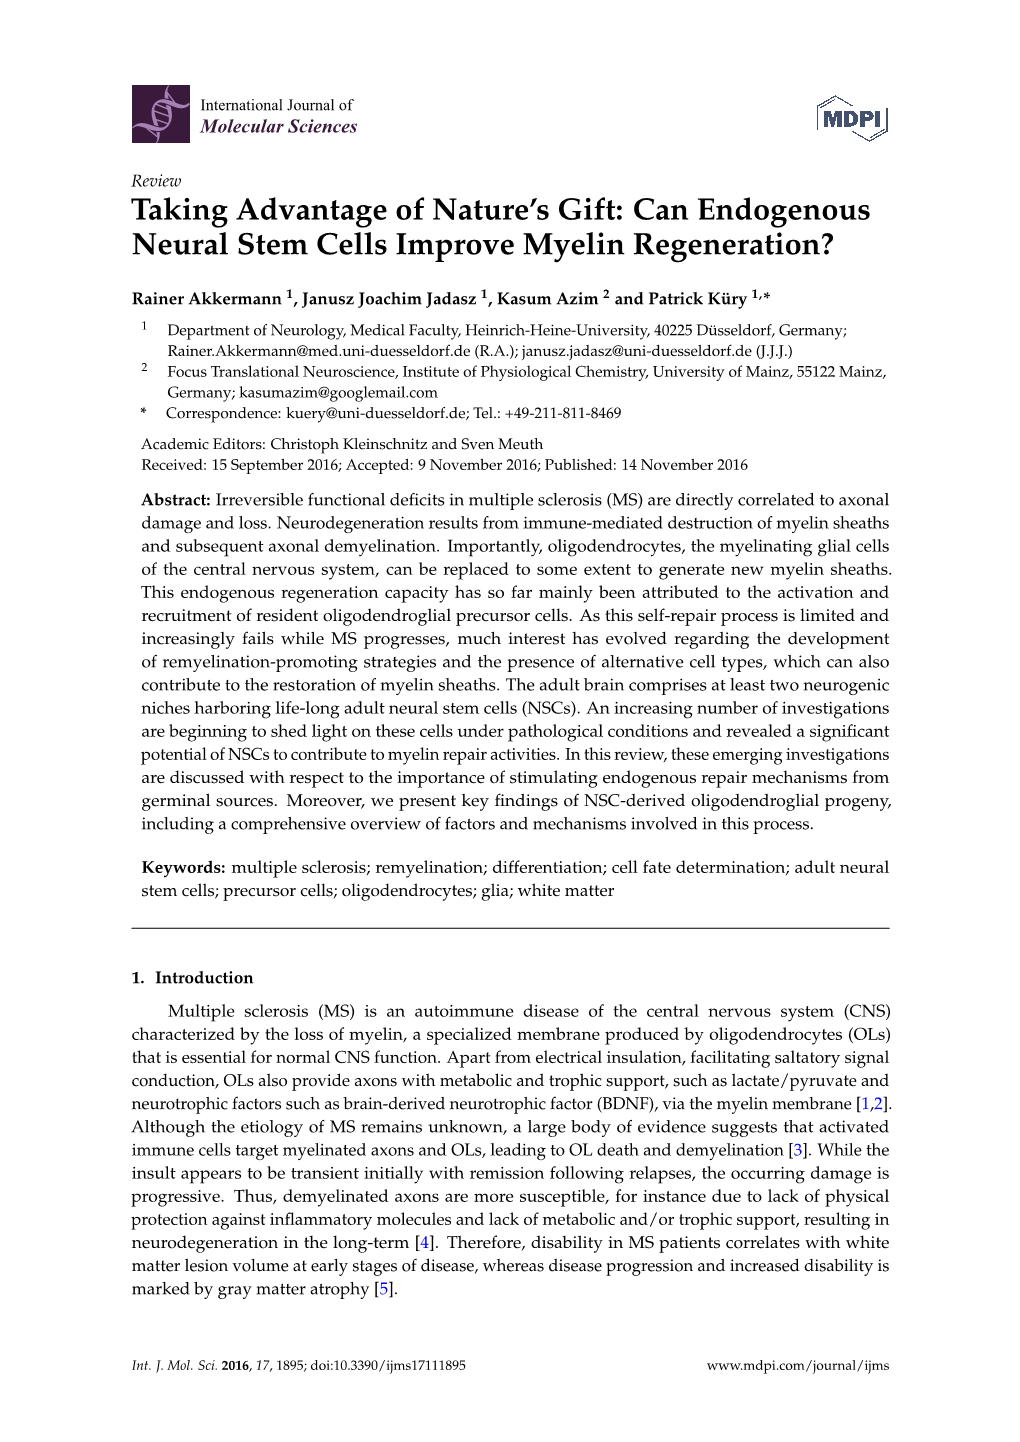 Can Endogenous Neural Stem Cells Improve Myelin Regeneration?